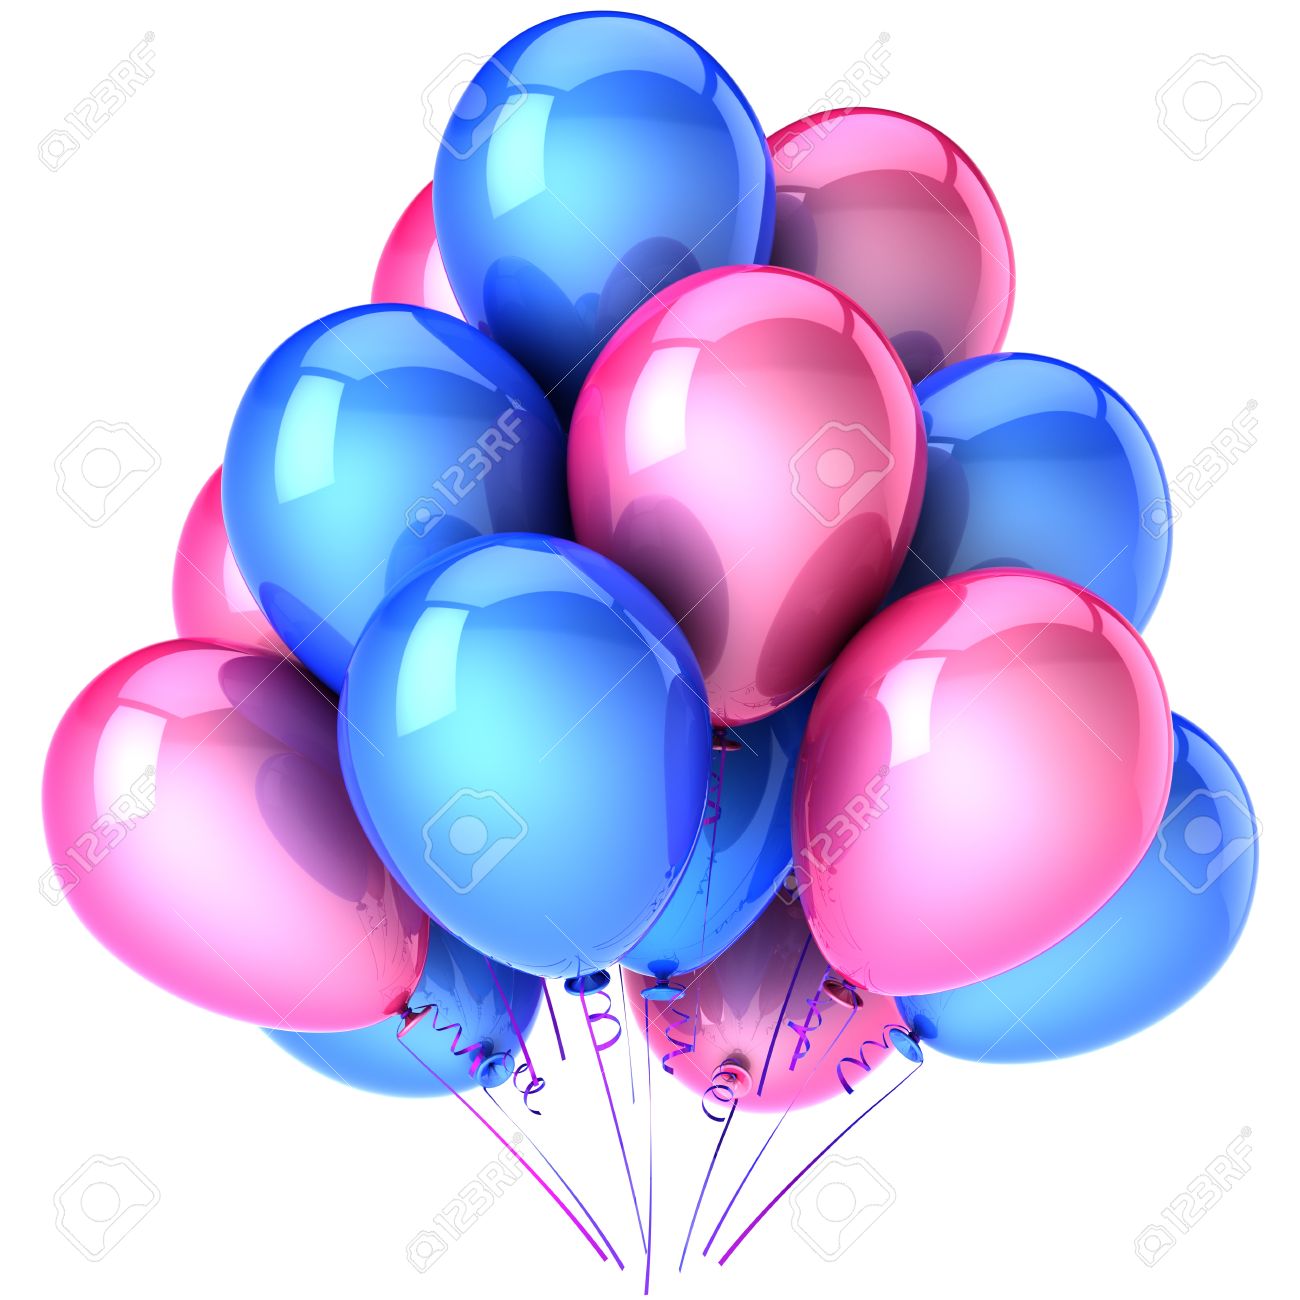 https://www.123rf.com/photo_8785791_balloons-colored-cyan-blue-pink-heterosexual-love-party-symbol-boyfriend-and-girlfriend-in-romance-a.html